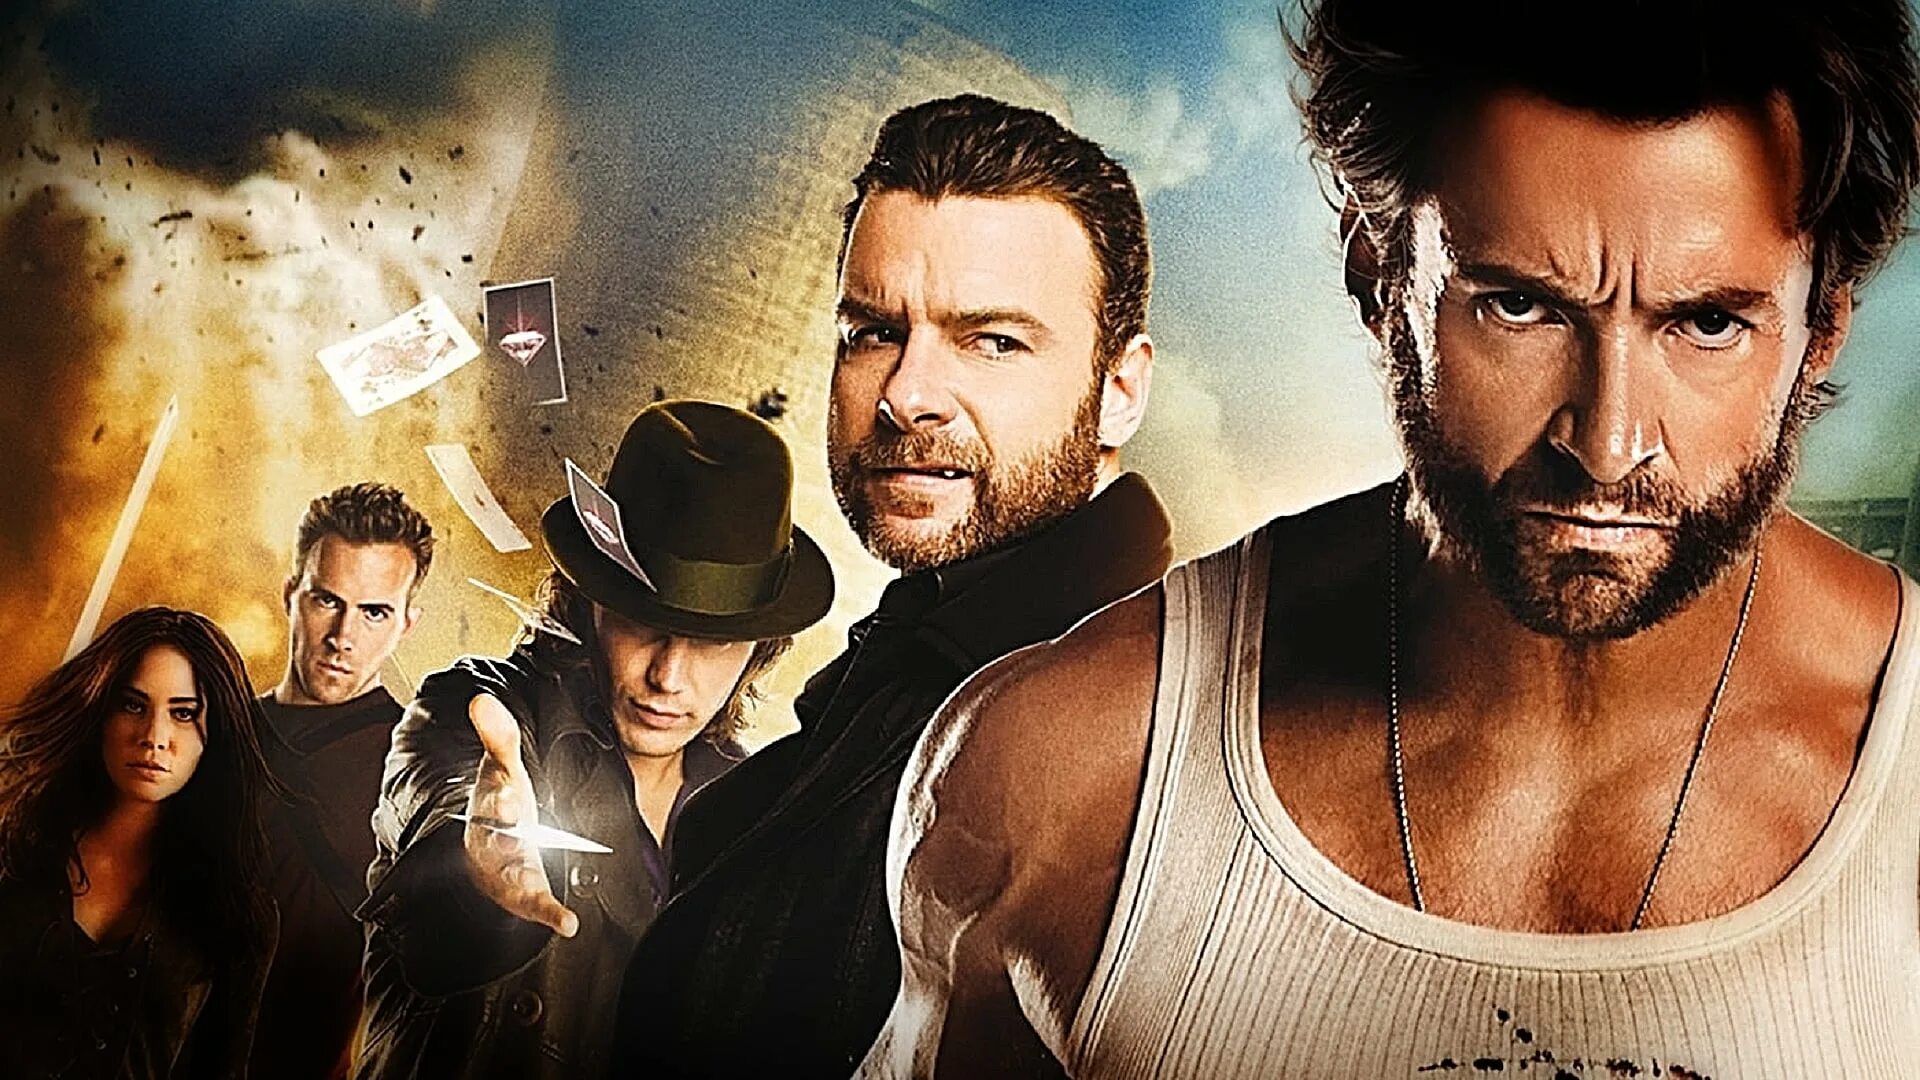 Икс начало росомаха. X-men Origins: Wolverine Blu ray. Люди Икс начало 2 сезон. X-men 2013 Blu ray. Накмни3 ы мвфии.